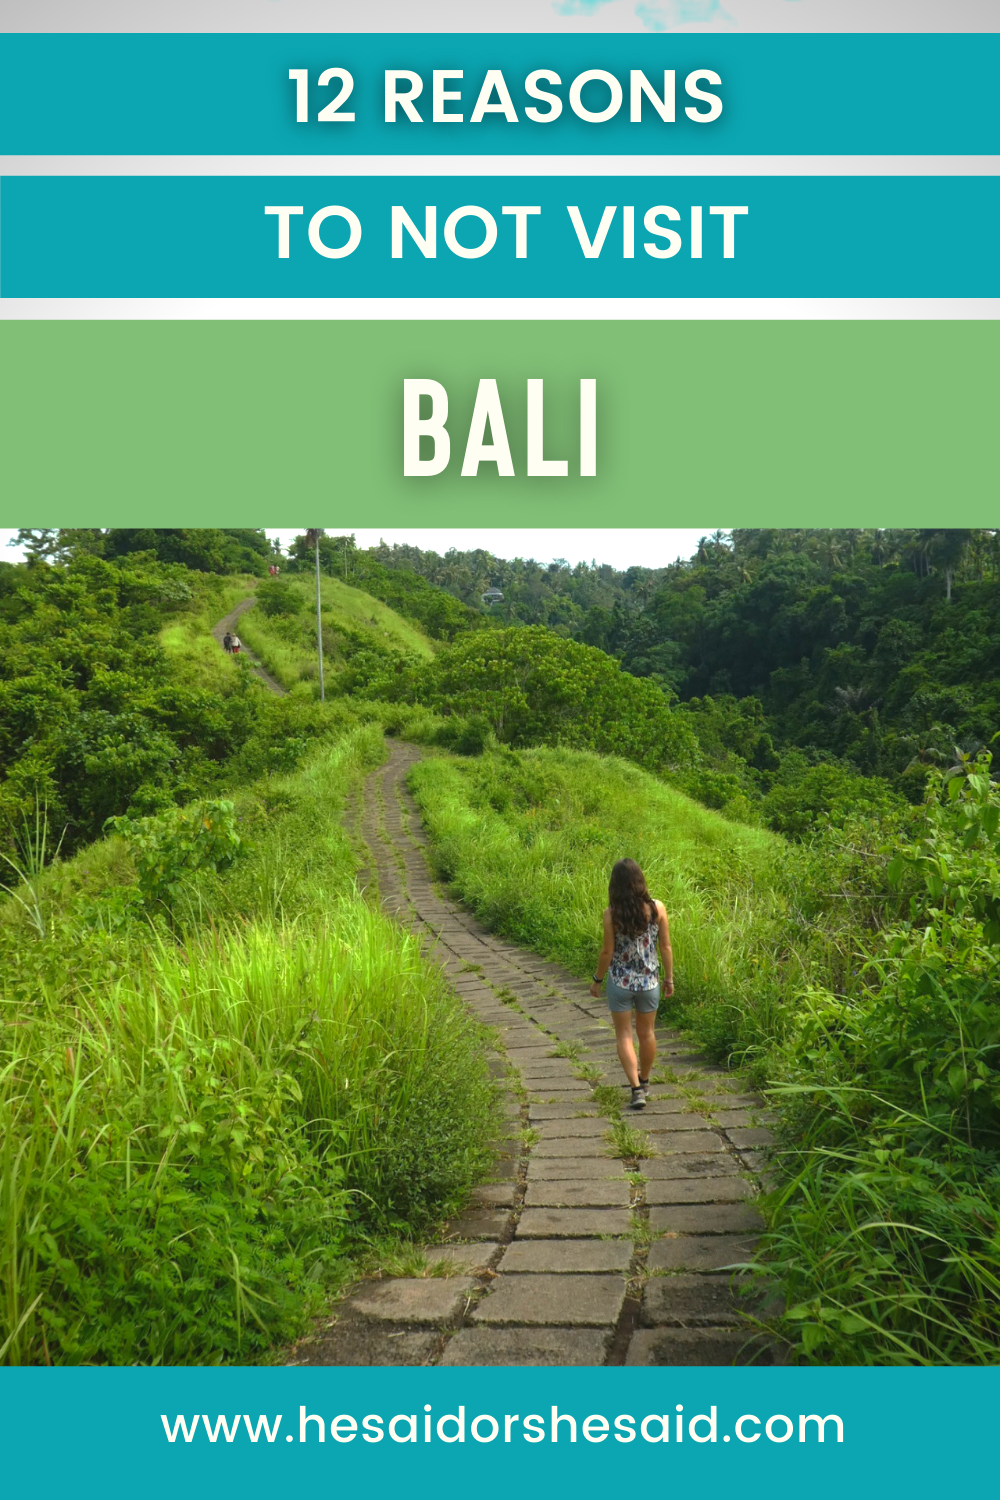 12 reasons not to visit Bali by hesaidorshesaid